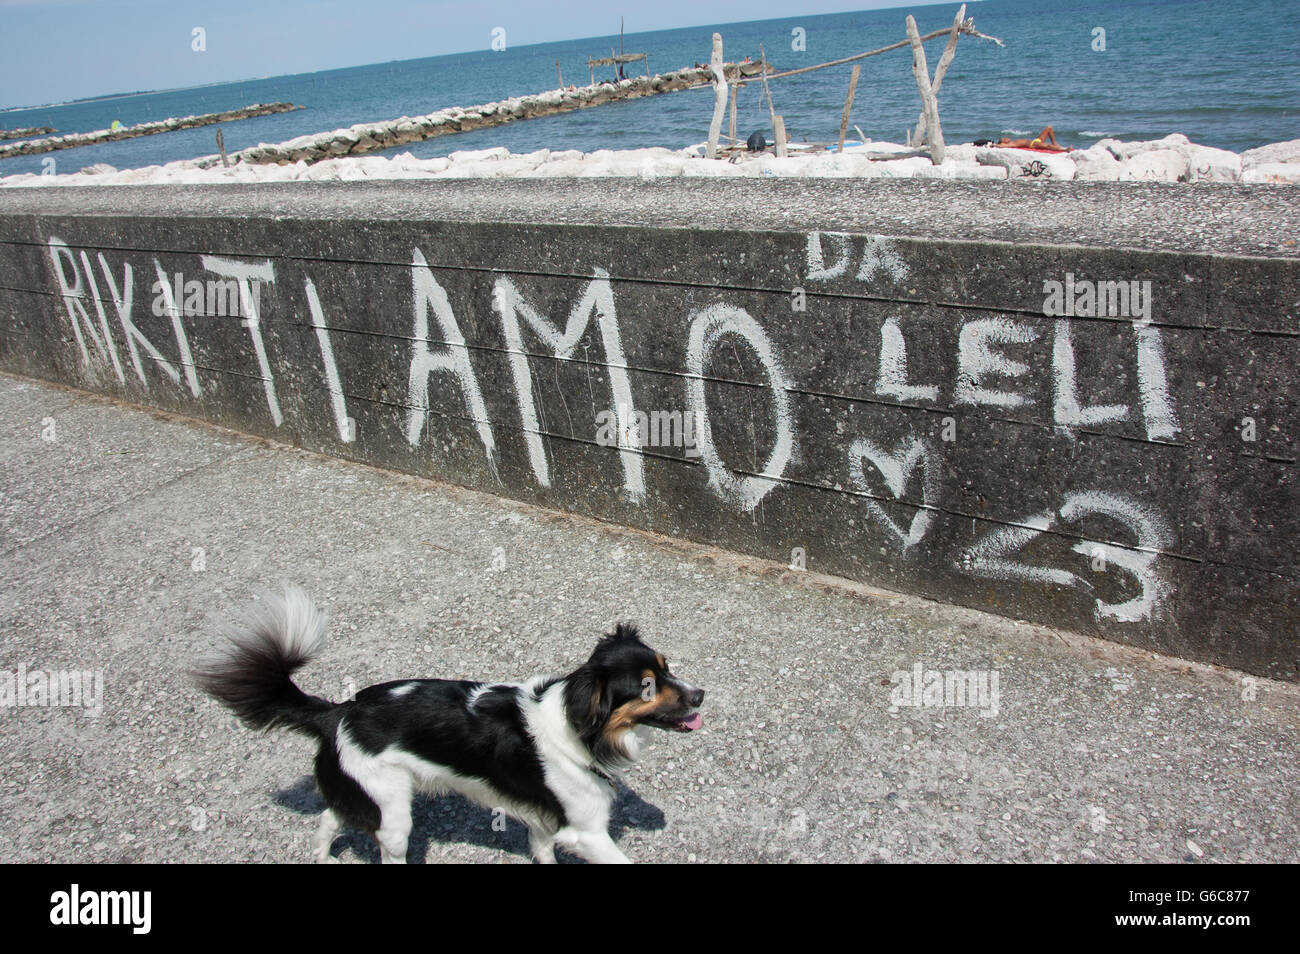 A dog near a graffiti in Lido di Venezia, Italy Stock Photo